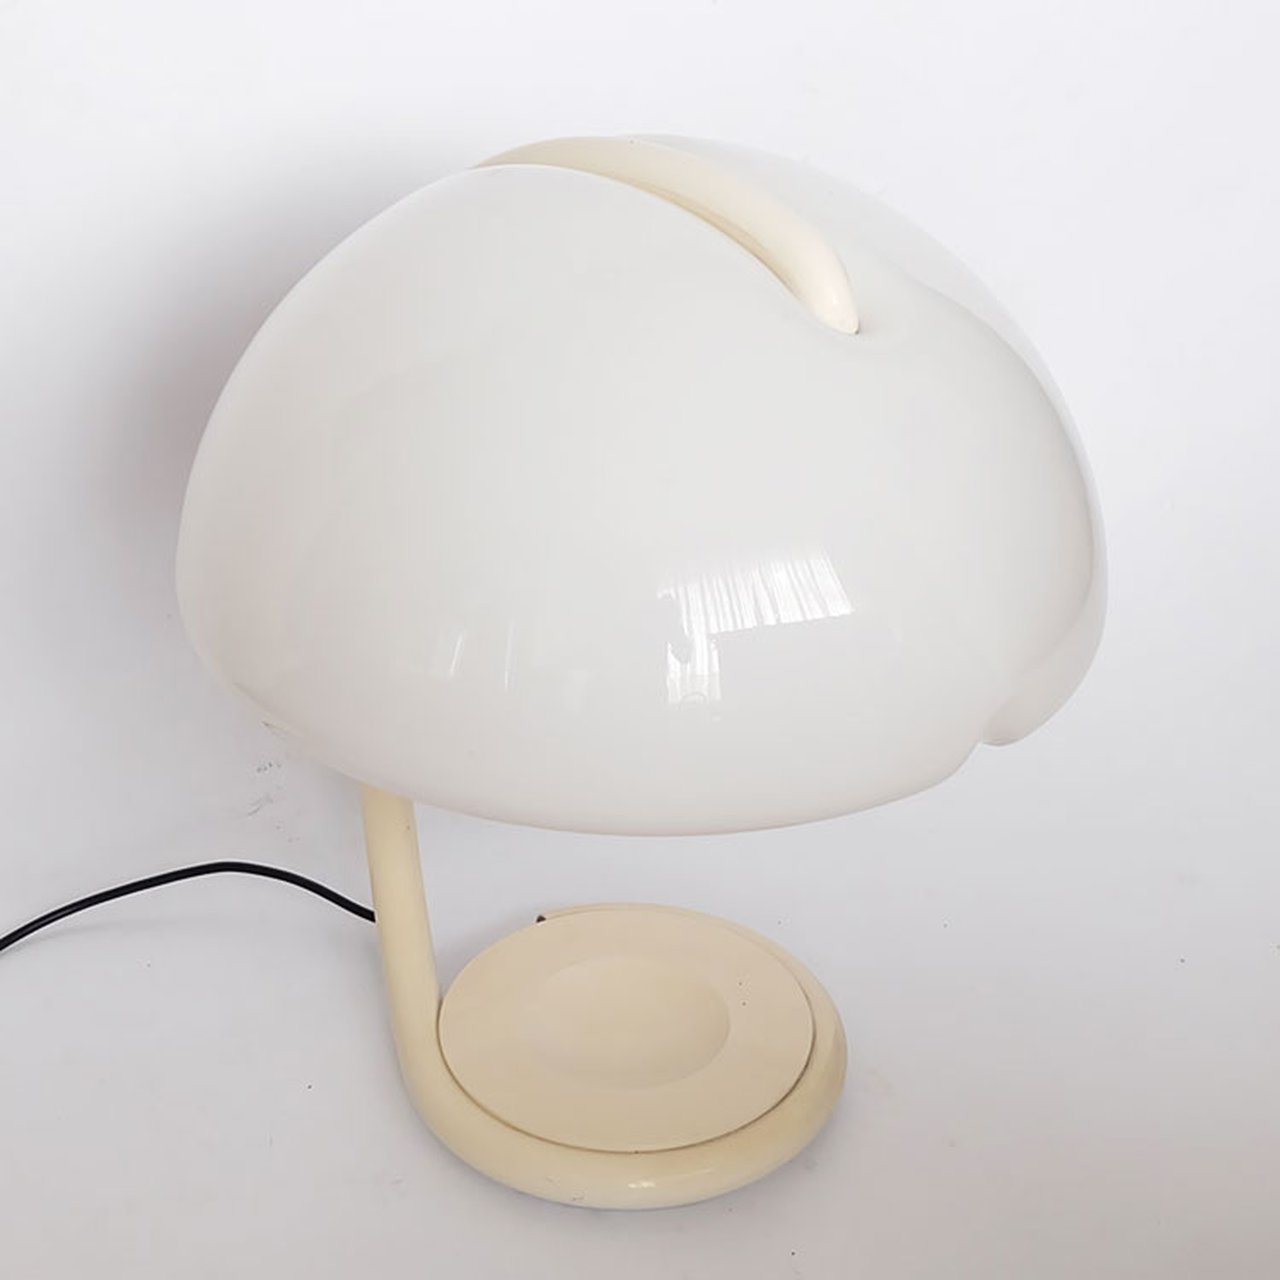 Image 10 of Design by Elio Martinelli. This design icon lamp, Serpente.